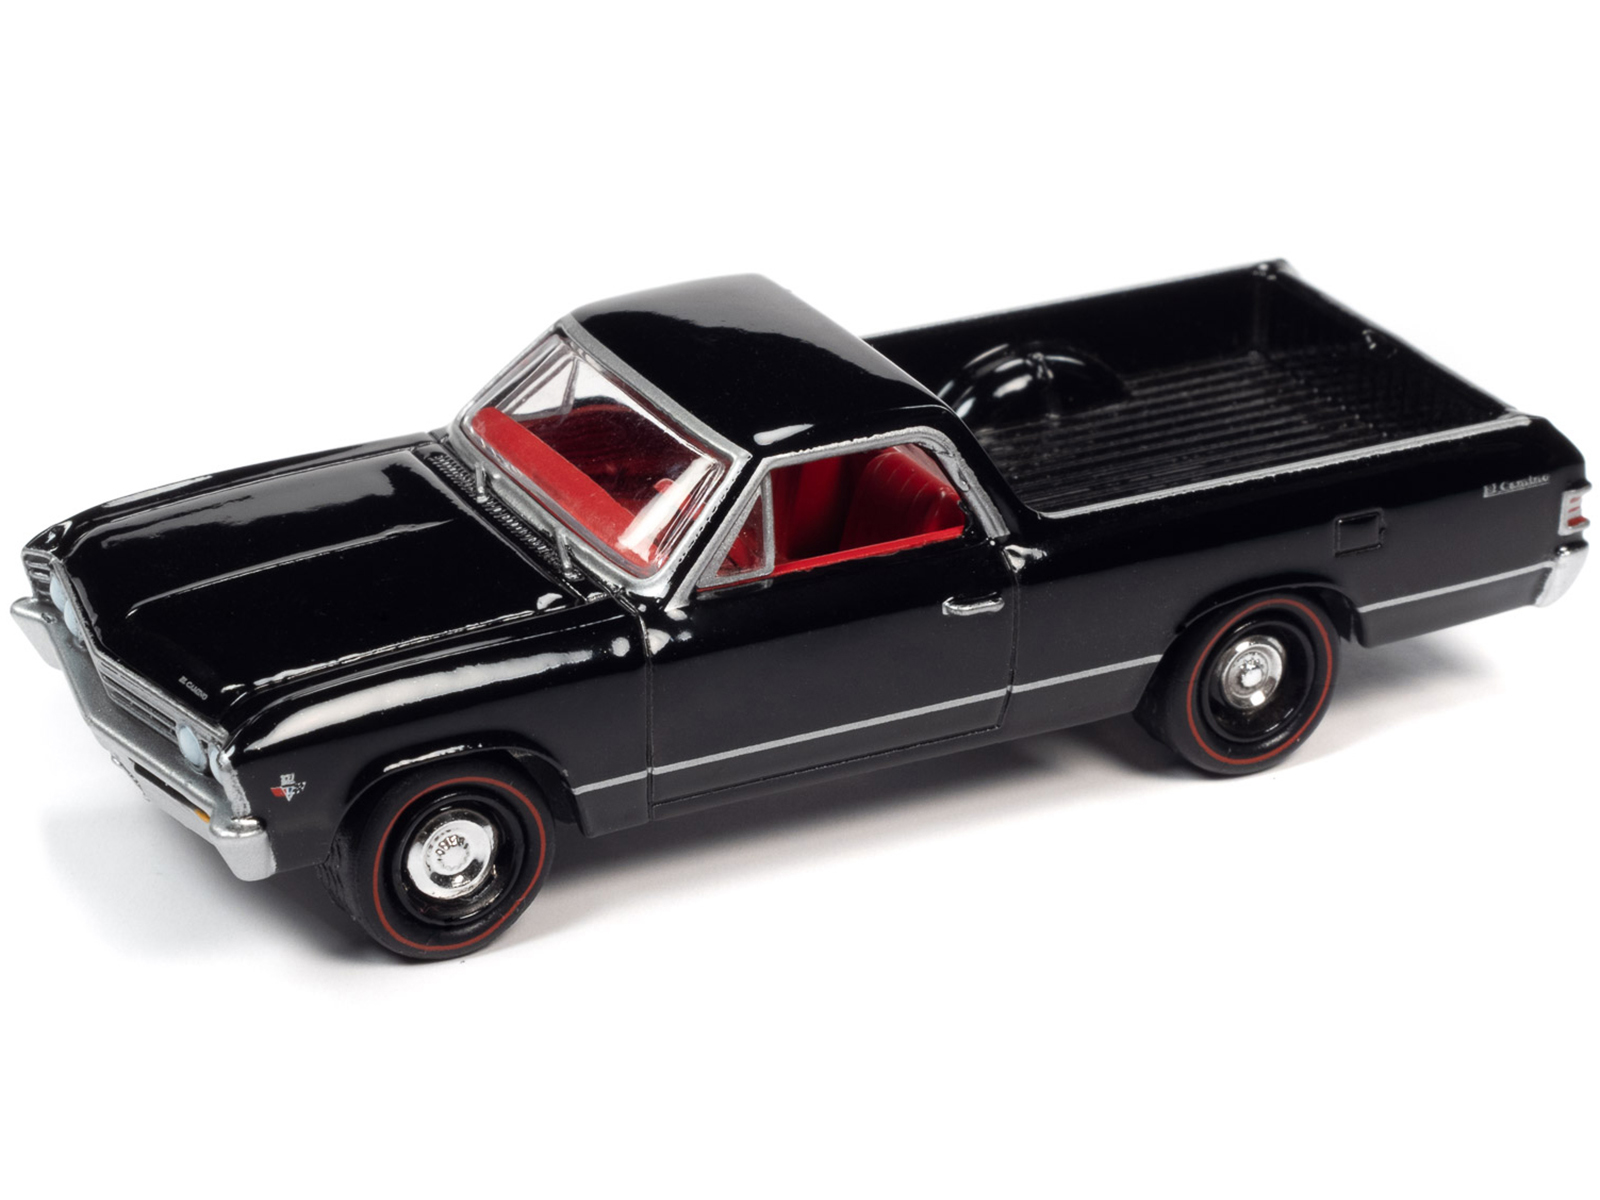 1967 Chevrolet El Camino Tuxedo Black with Red Interior Ltd Ed to 11652